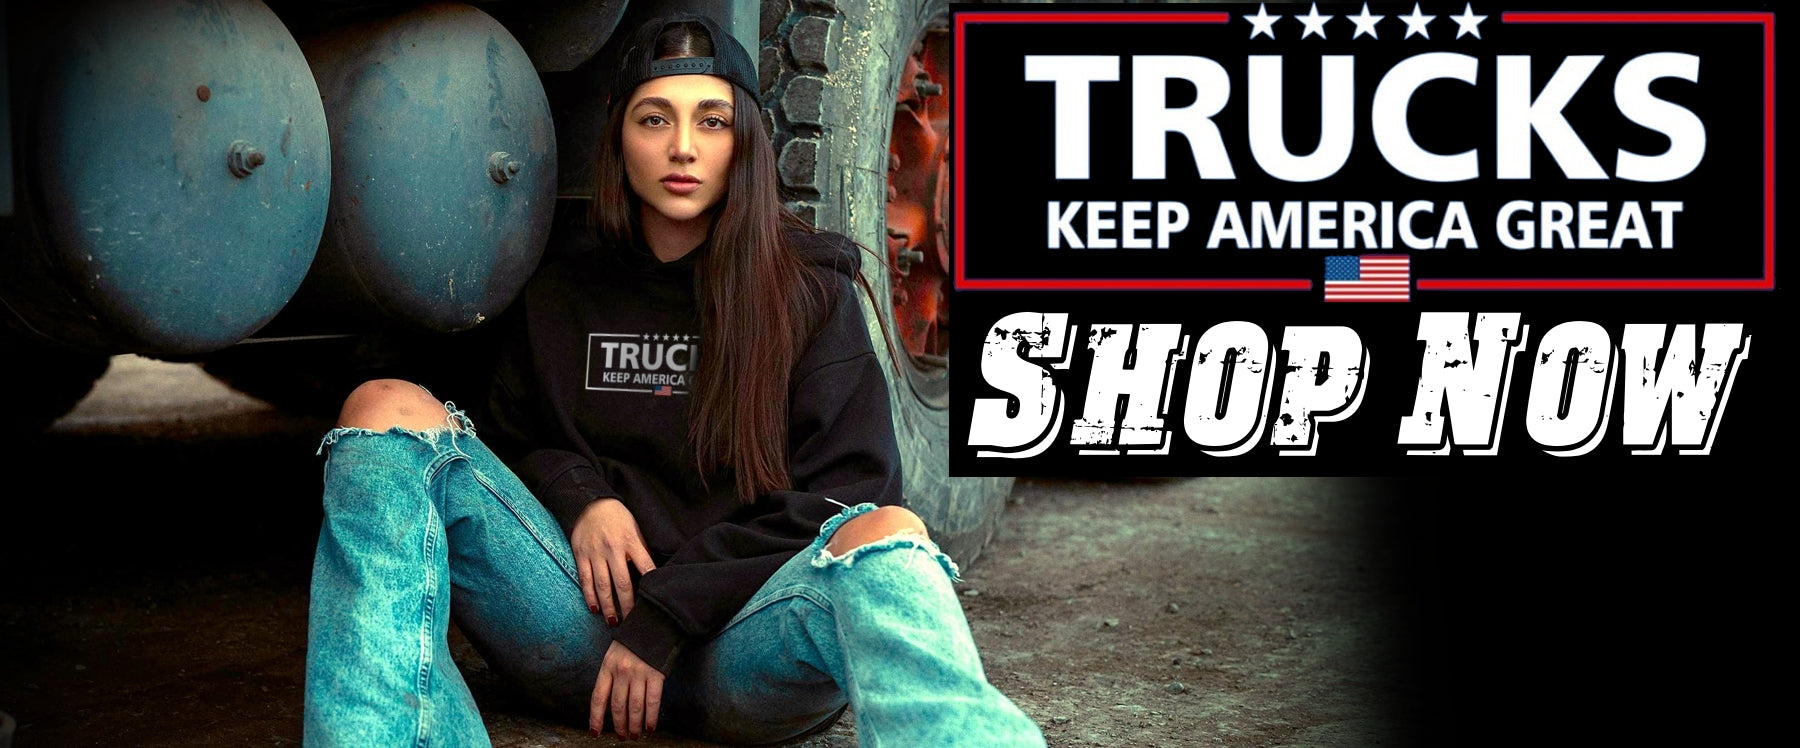 Trucks_Keep_America_Great_workwear_shirts_header